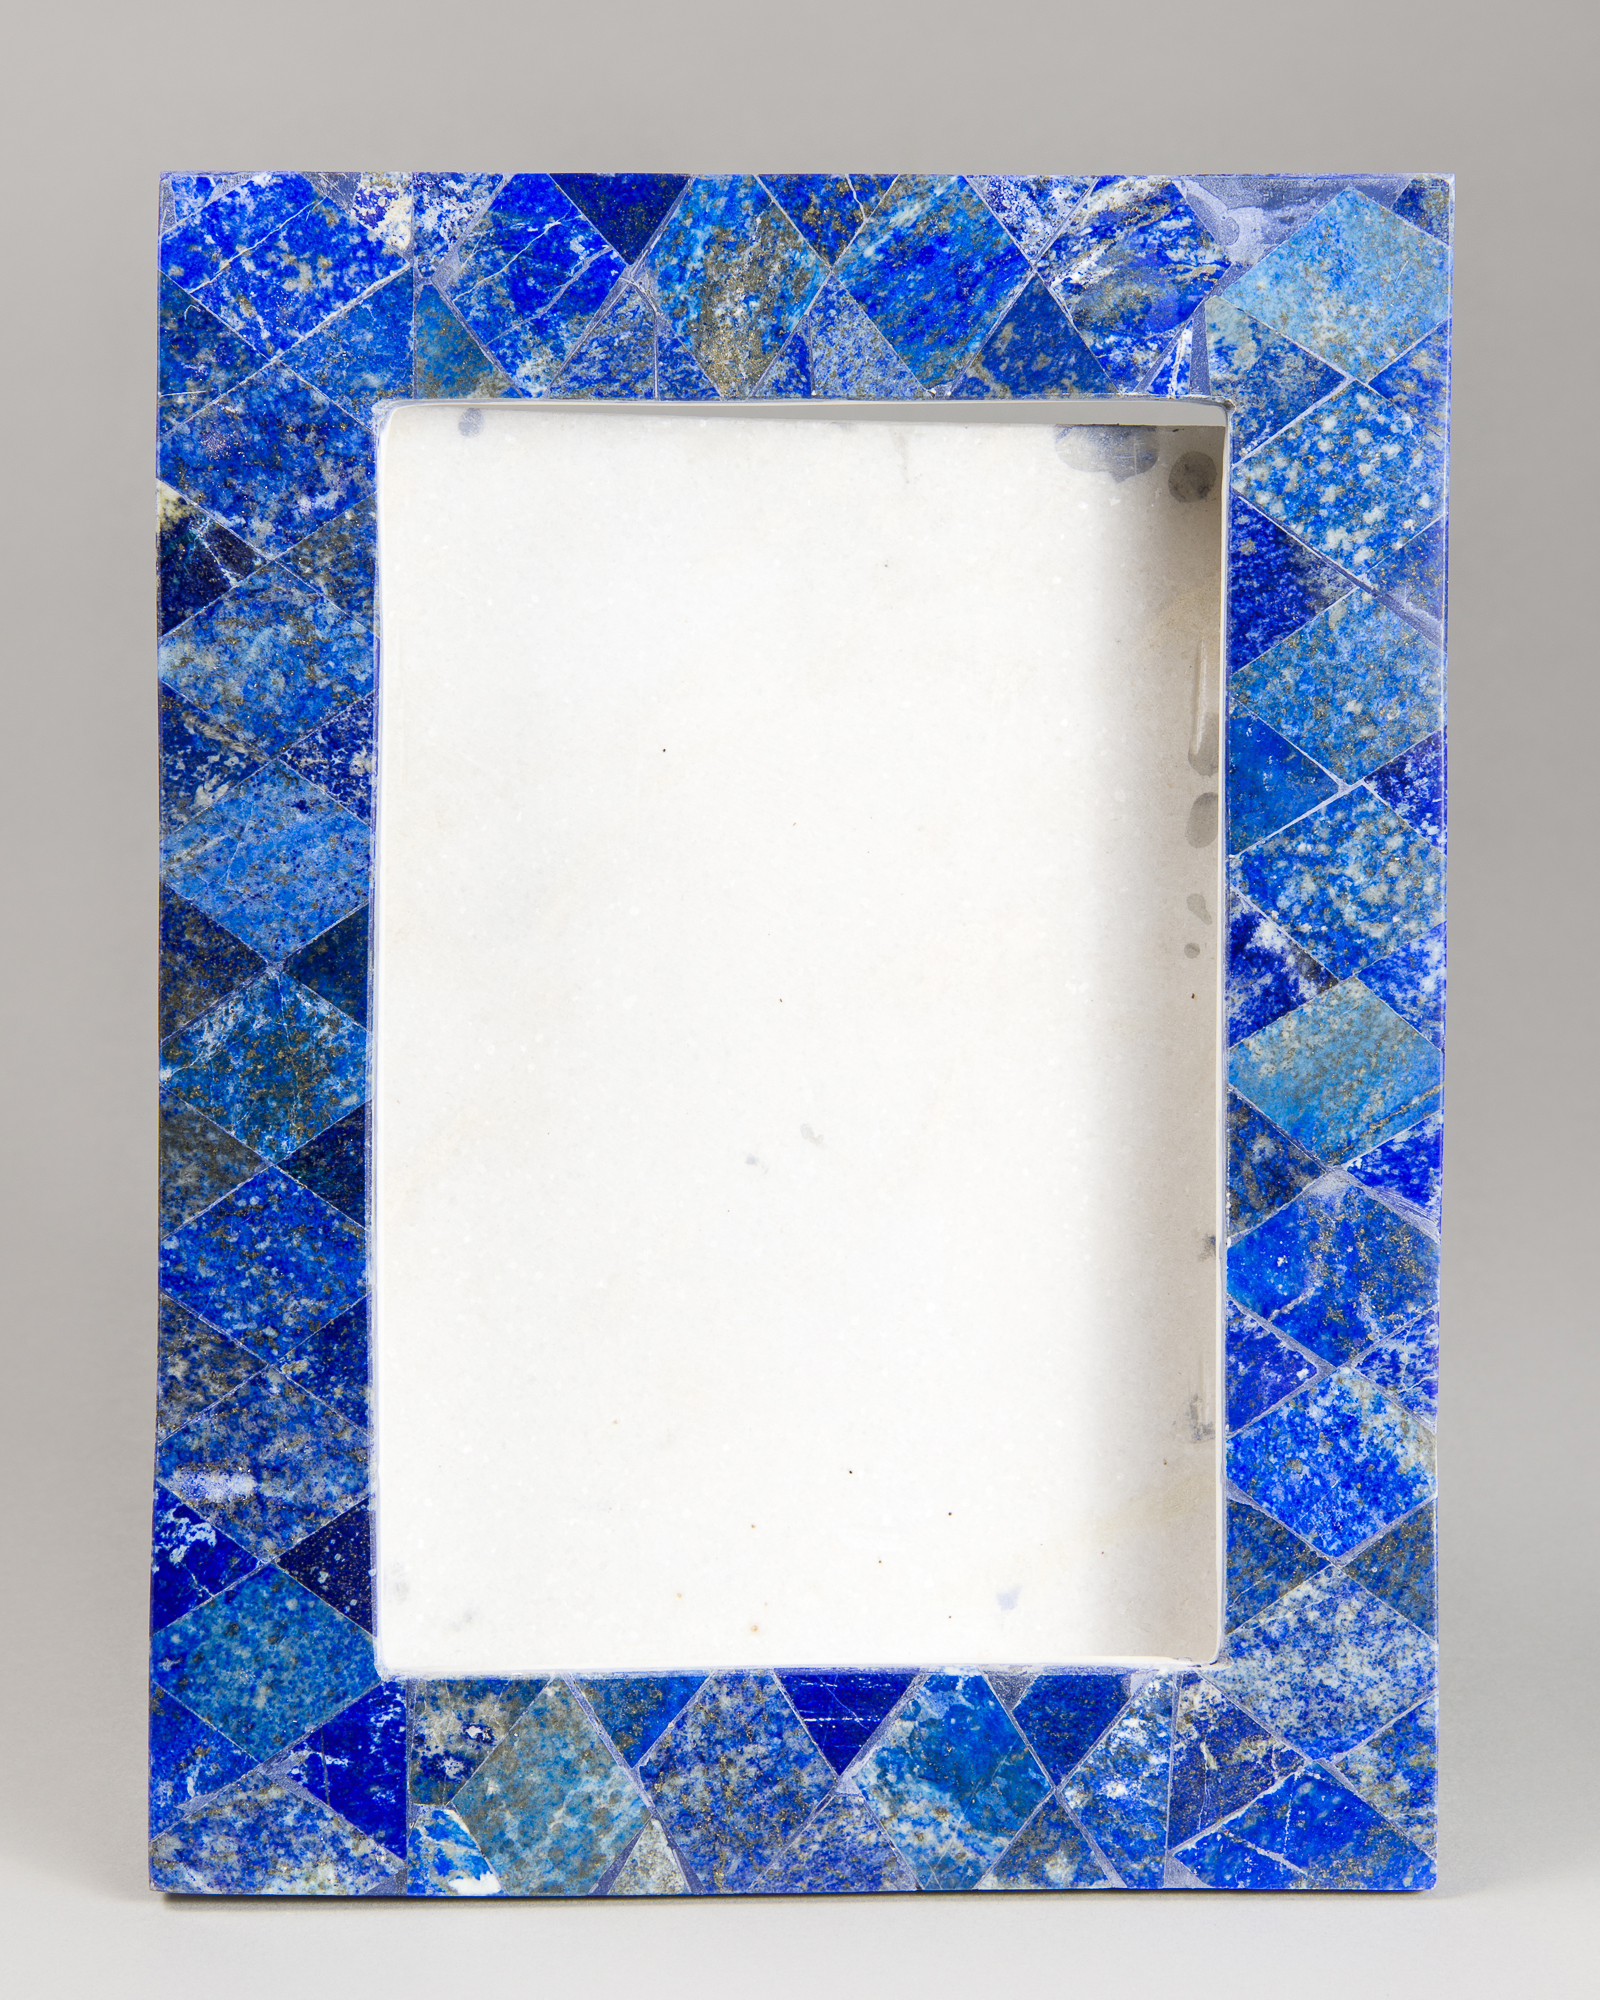 A LAPIS LAZULI PICTURE FRAME ON WHITE MARBLE (h 31cm x w 33cm x d 8cm)